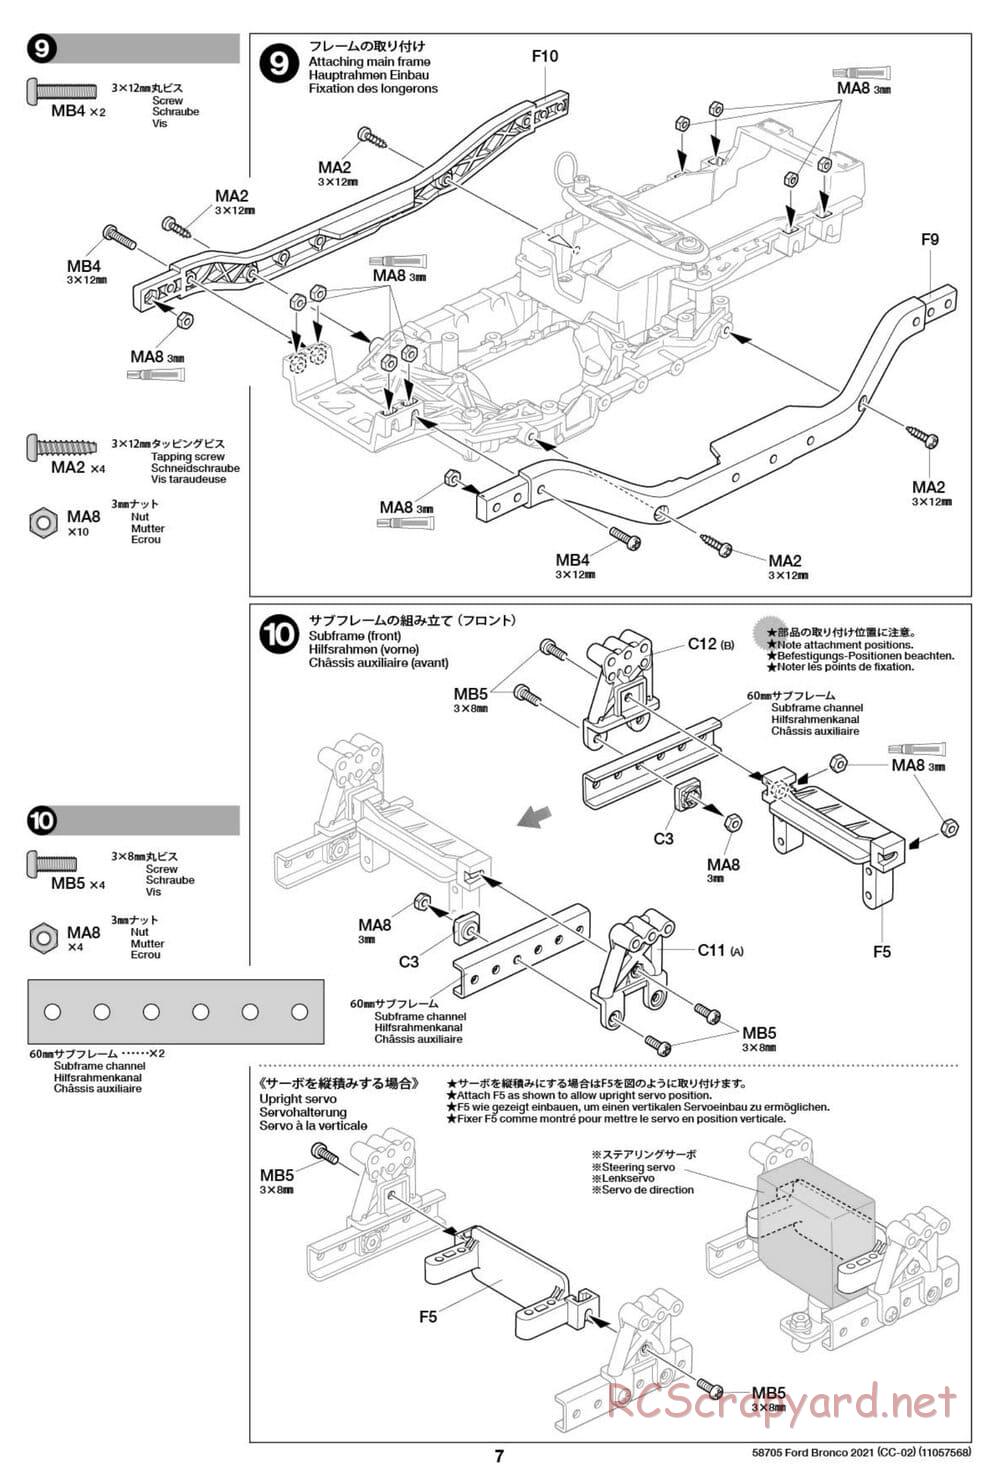 Tamiya - Ford Bronco 2021 - CC-02 Chassis - Manual - Page 7